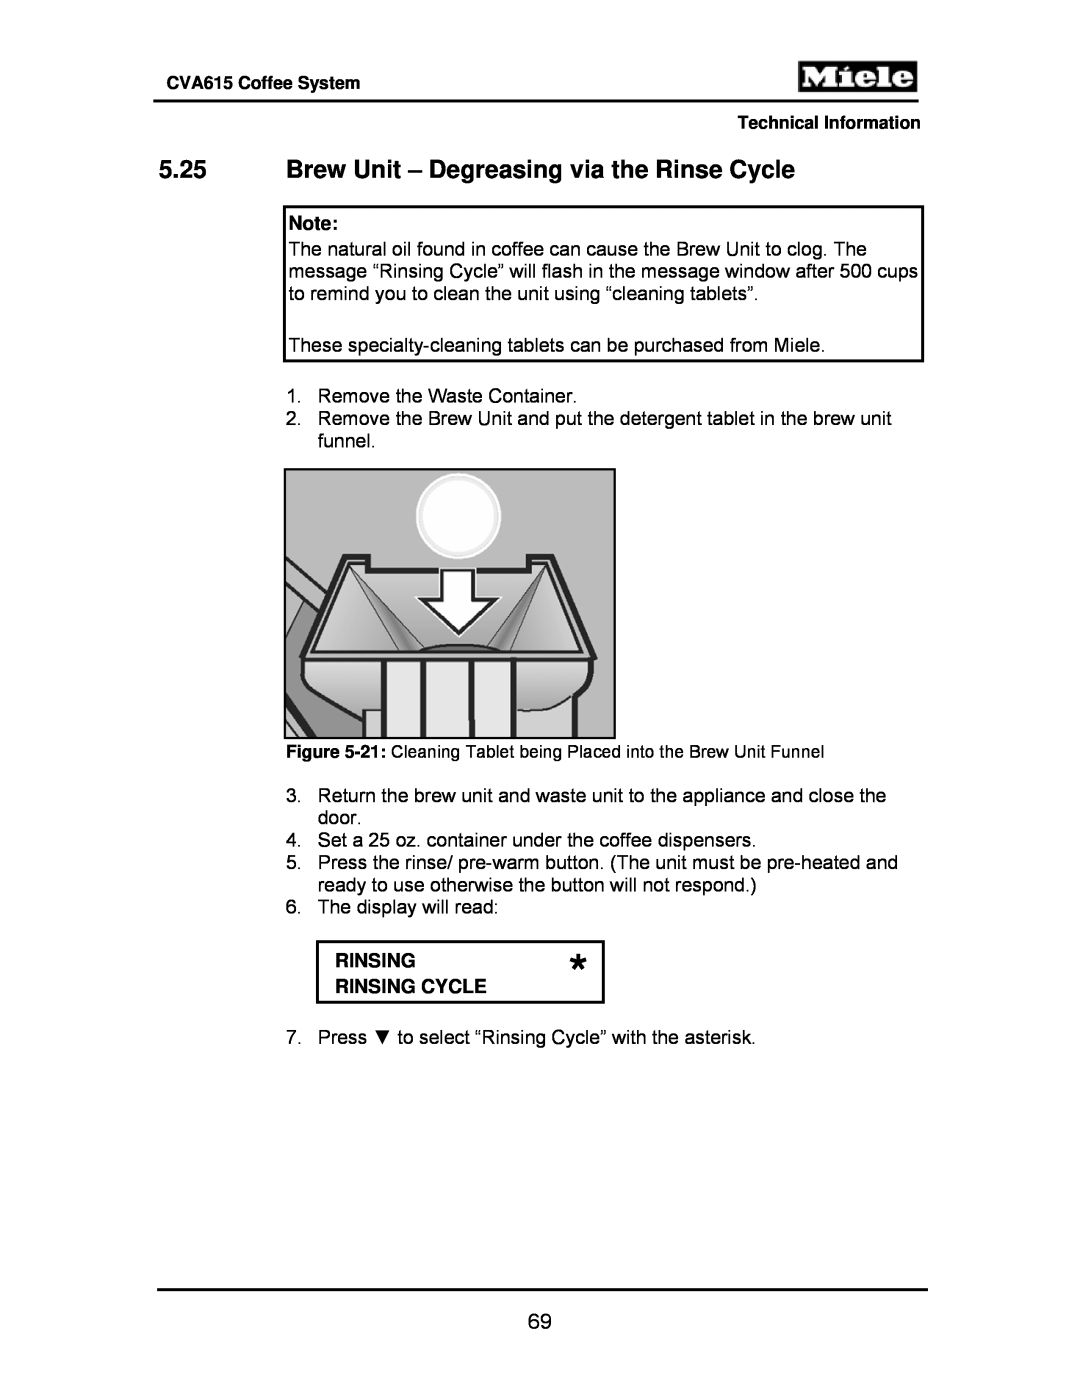 Miele CVA615 manual 5.25Brew Unit – Degreasing via the Rinse Cycle, Rinsing Rinsing Cycle 